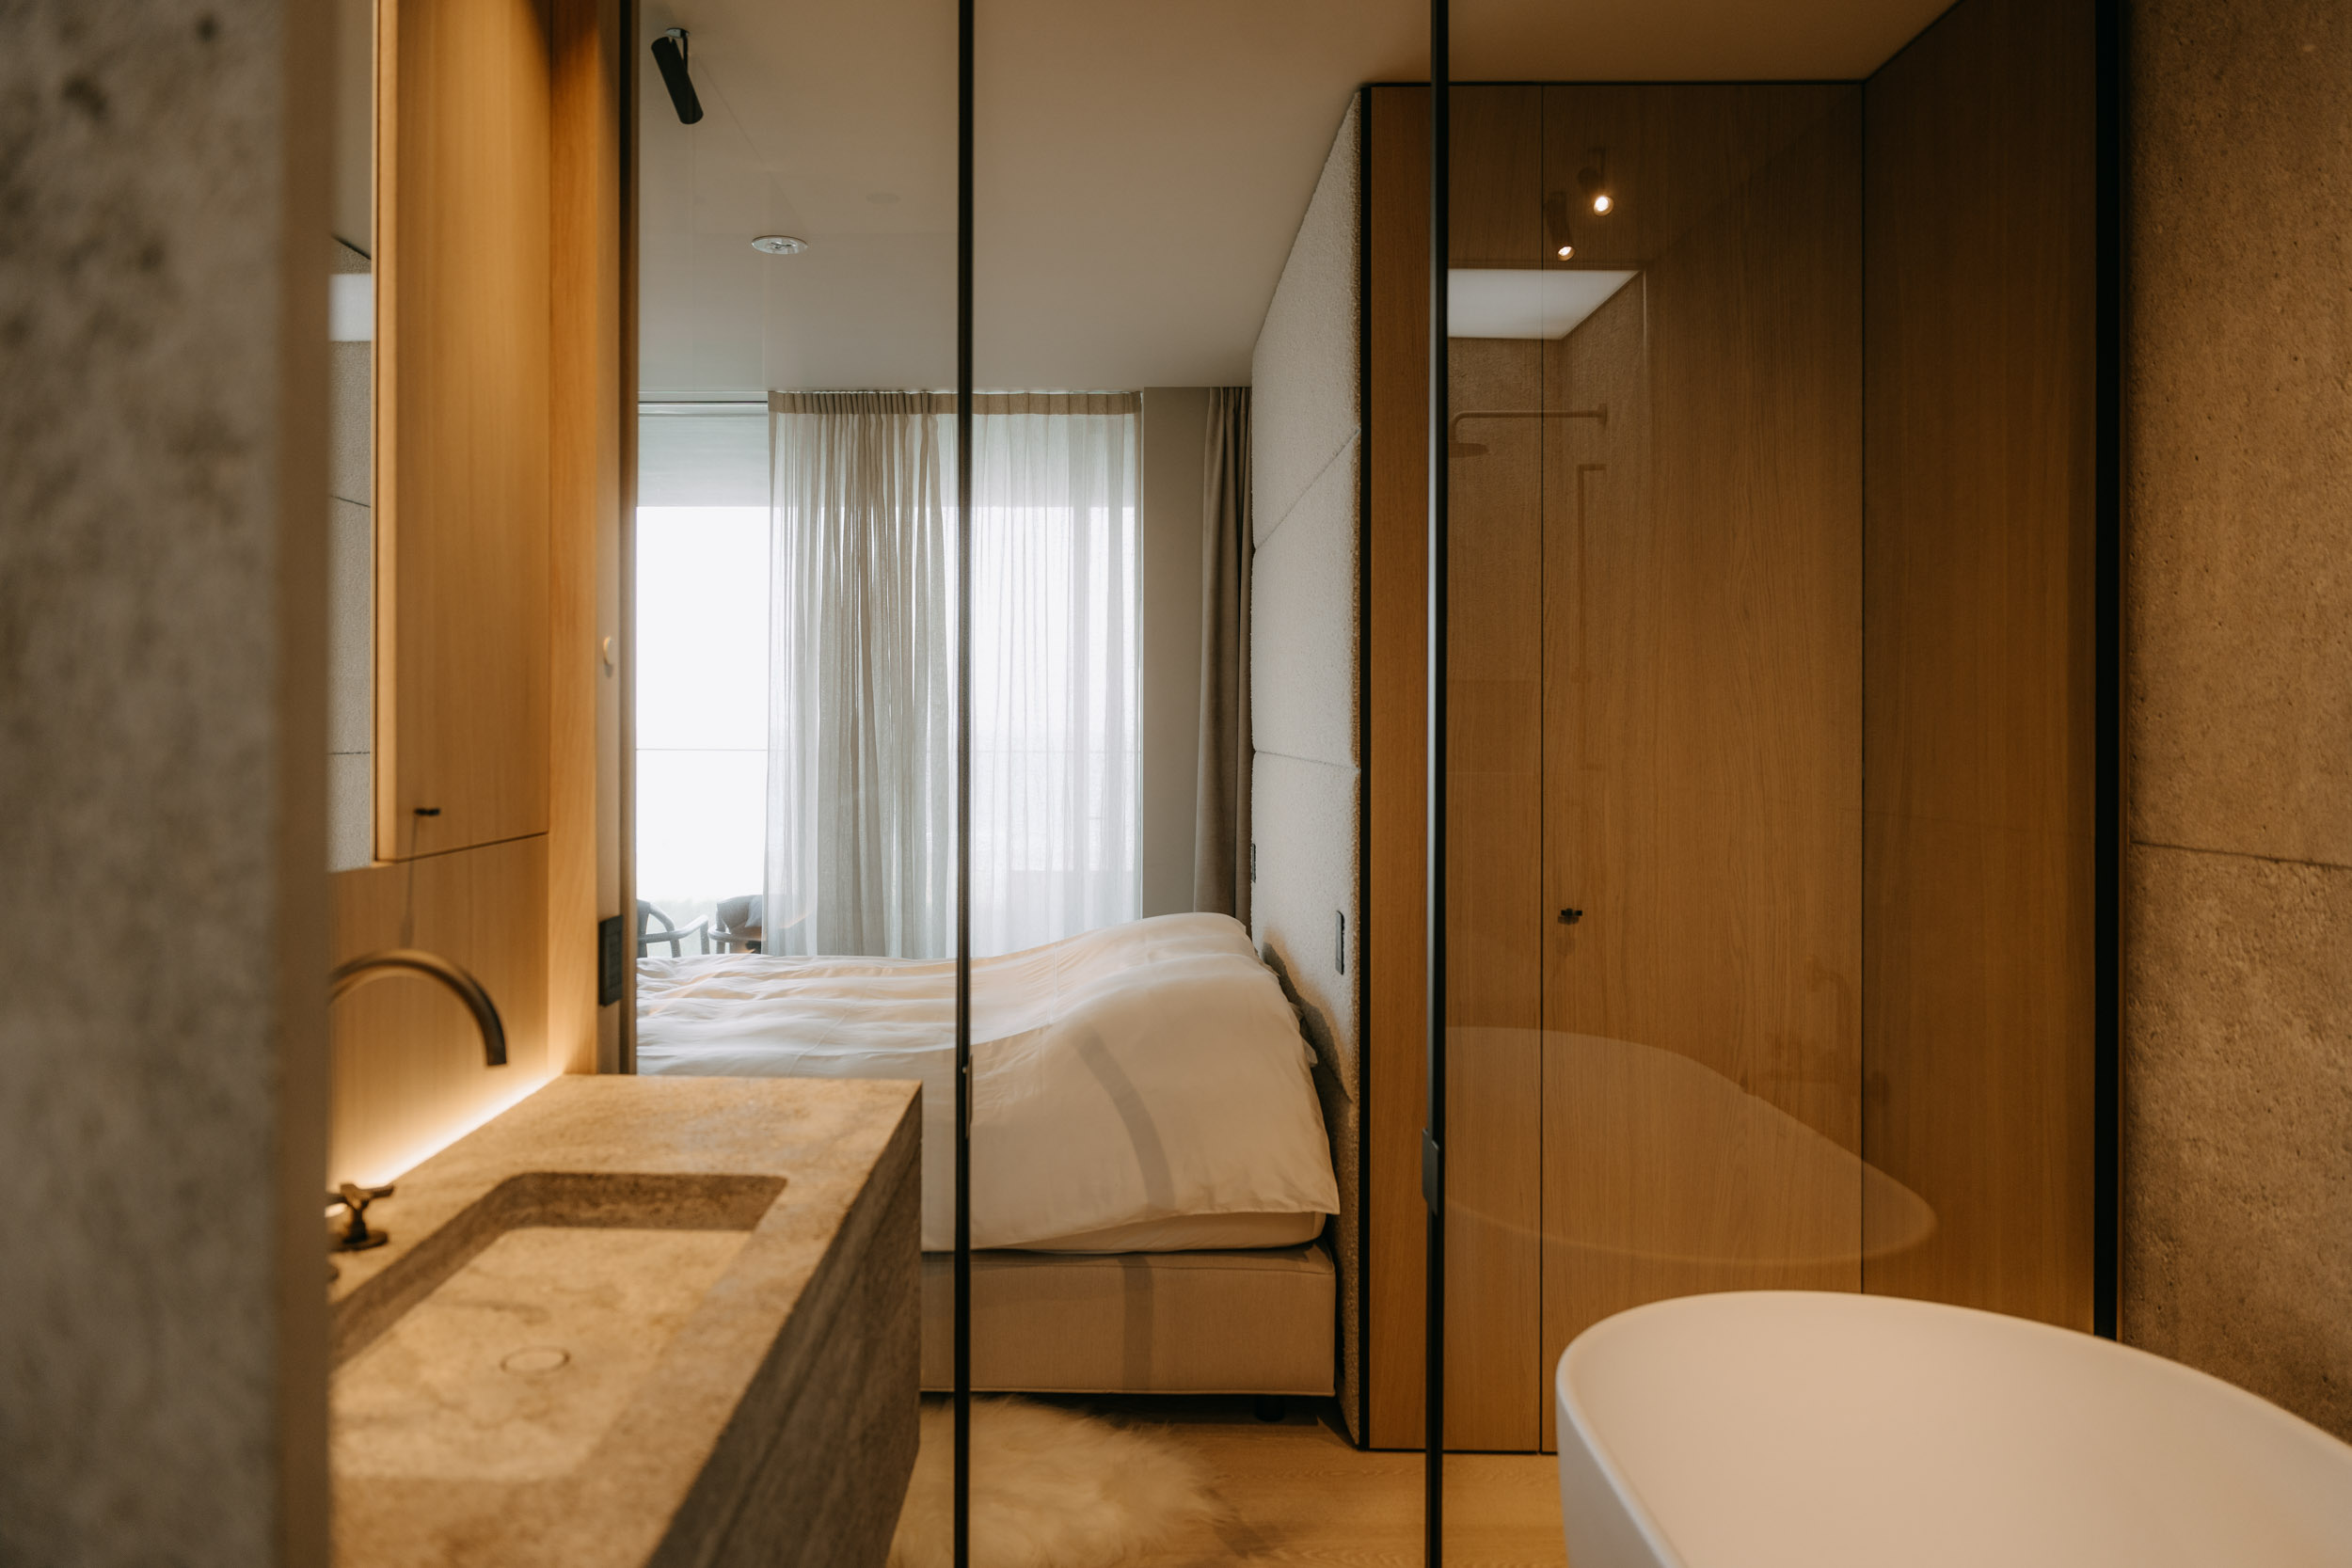 Ensuite badkamer | Spinder Interieurbouw Zundert